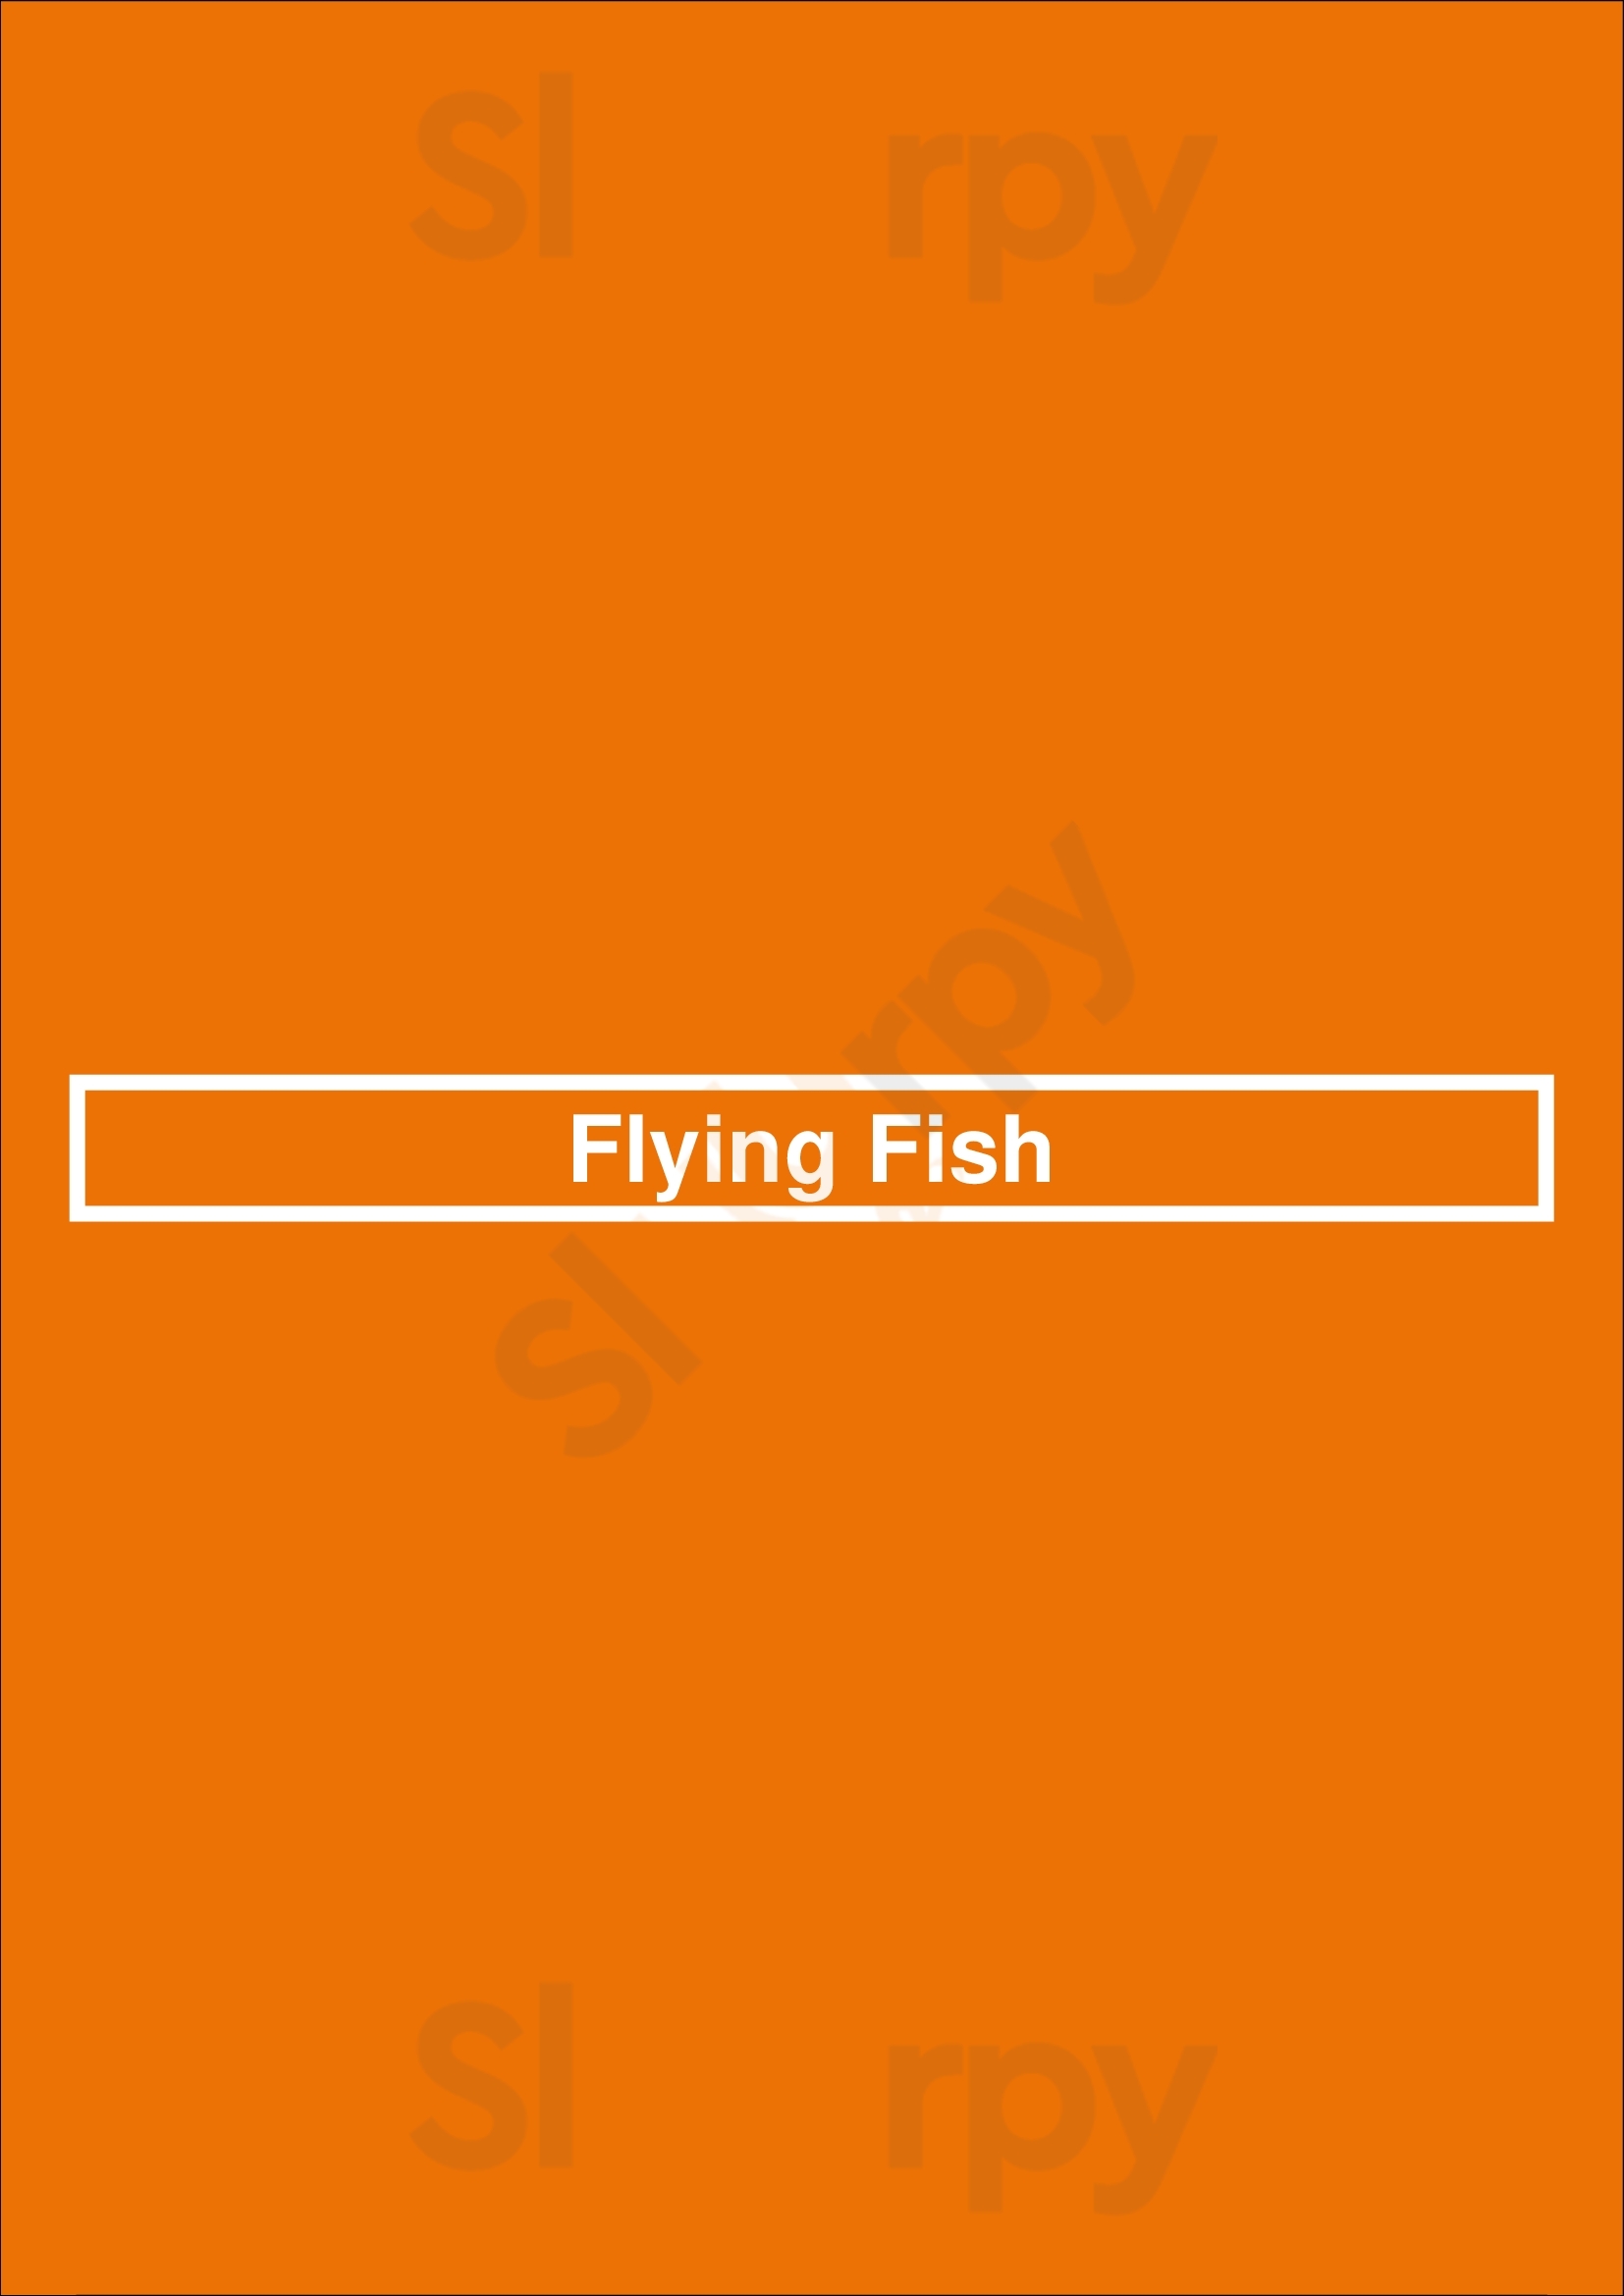 Flying Fish Fort Worth Menu - 1